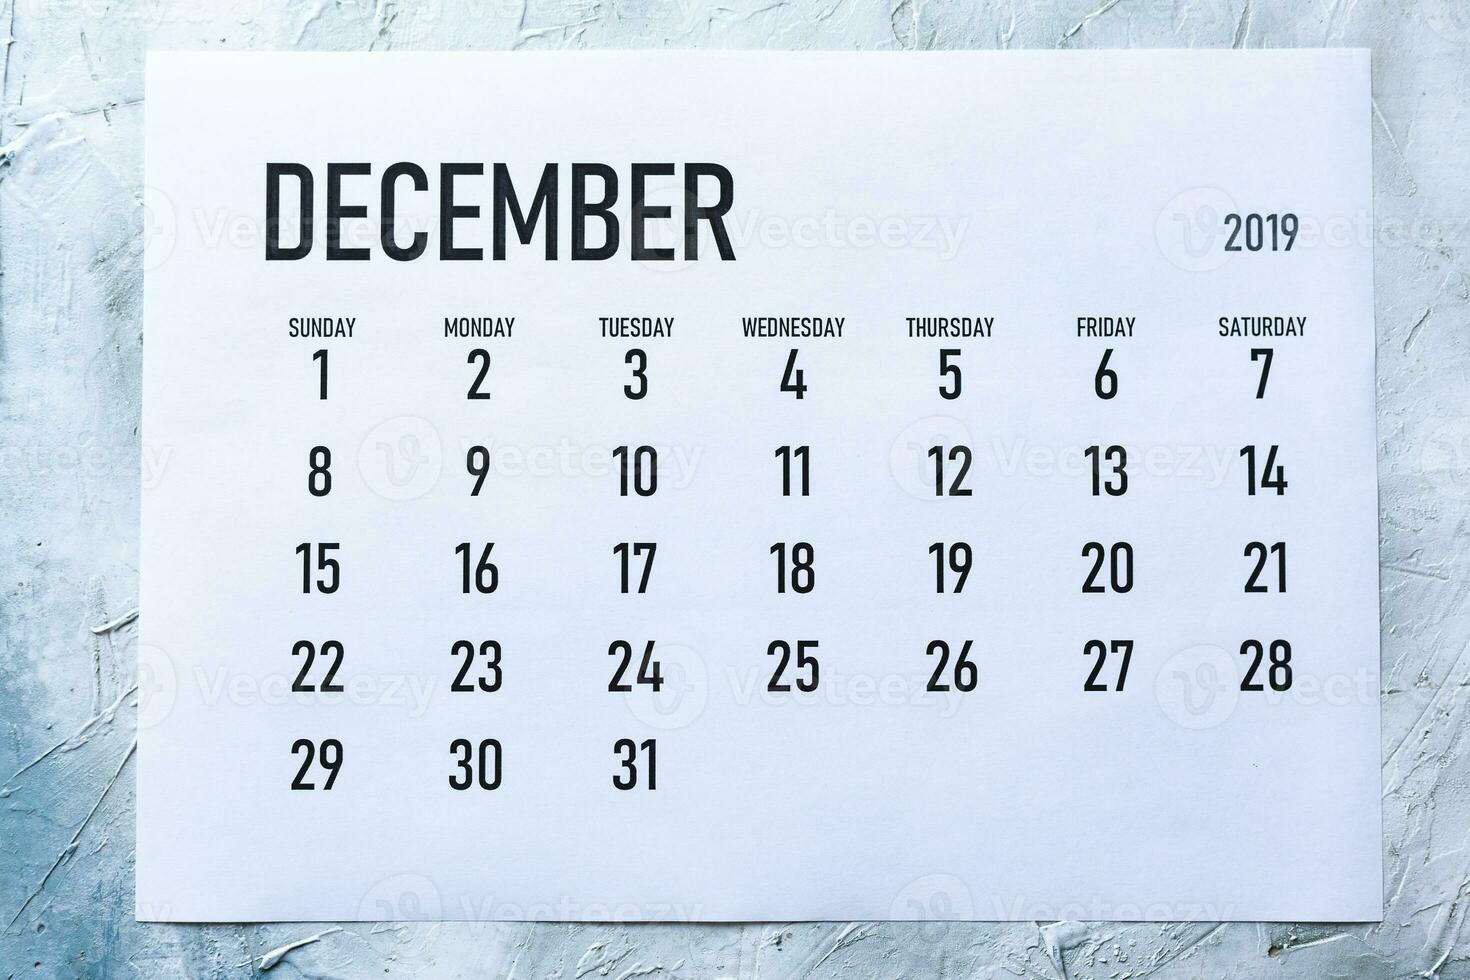 Monthly December  2019 calendar photo